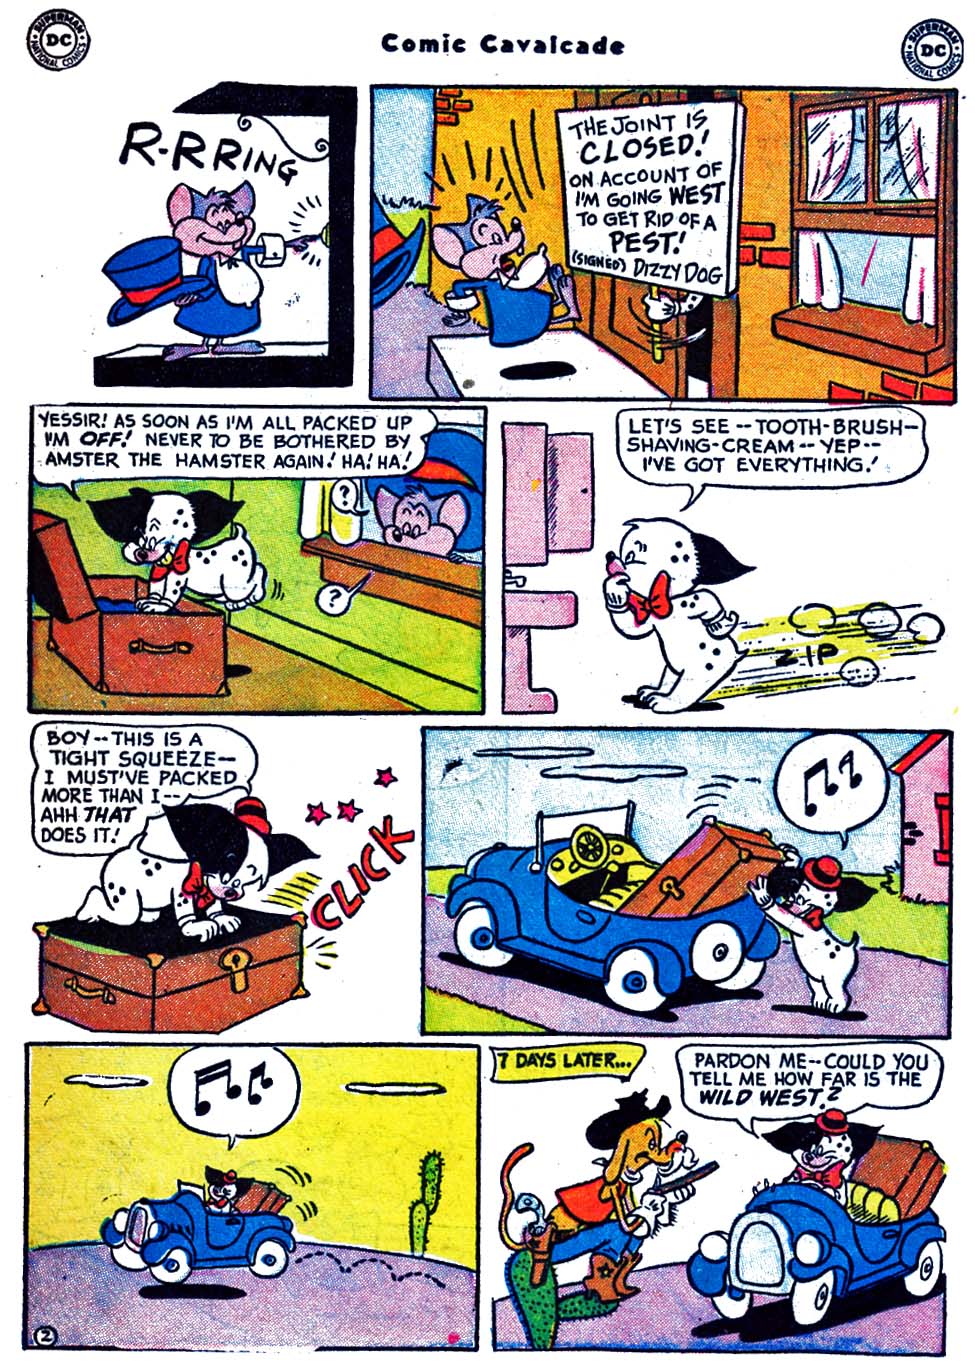 Comic Cavalcade issue 53 - Page 40